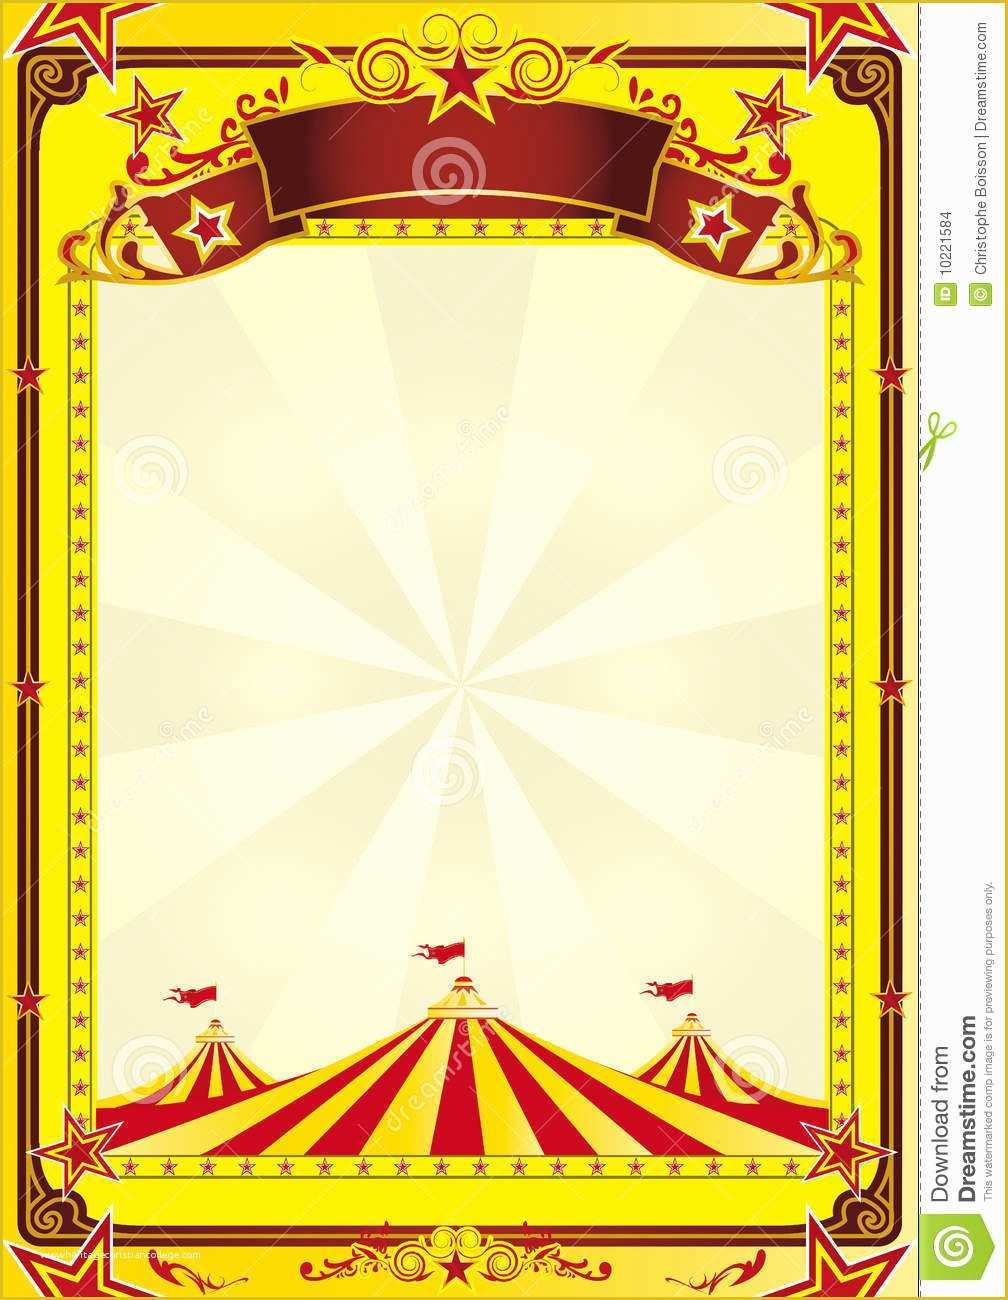 Circus Poster Template Free Download Of Circus Carnival